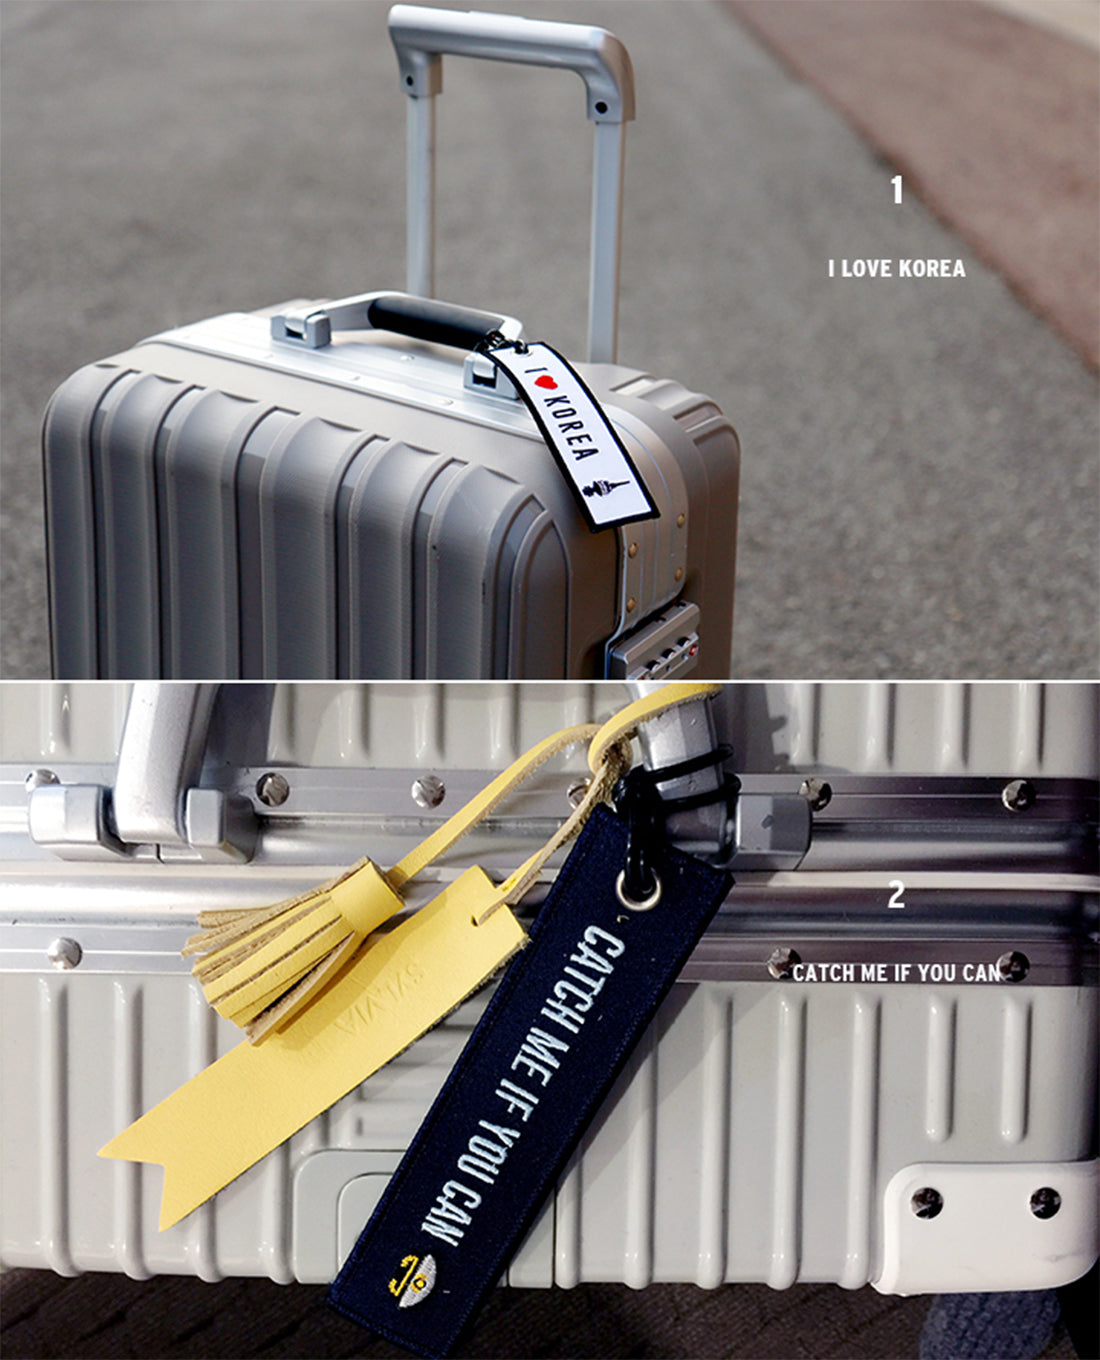 luggage name tag